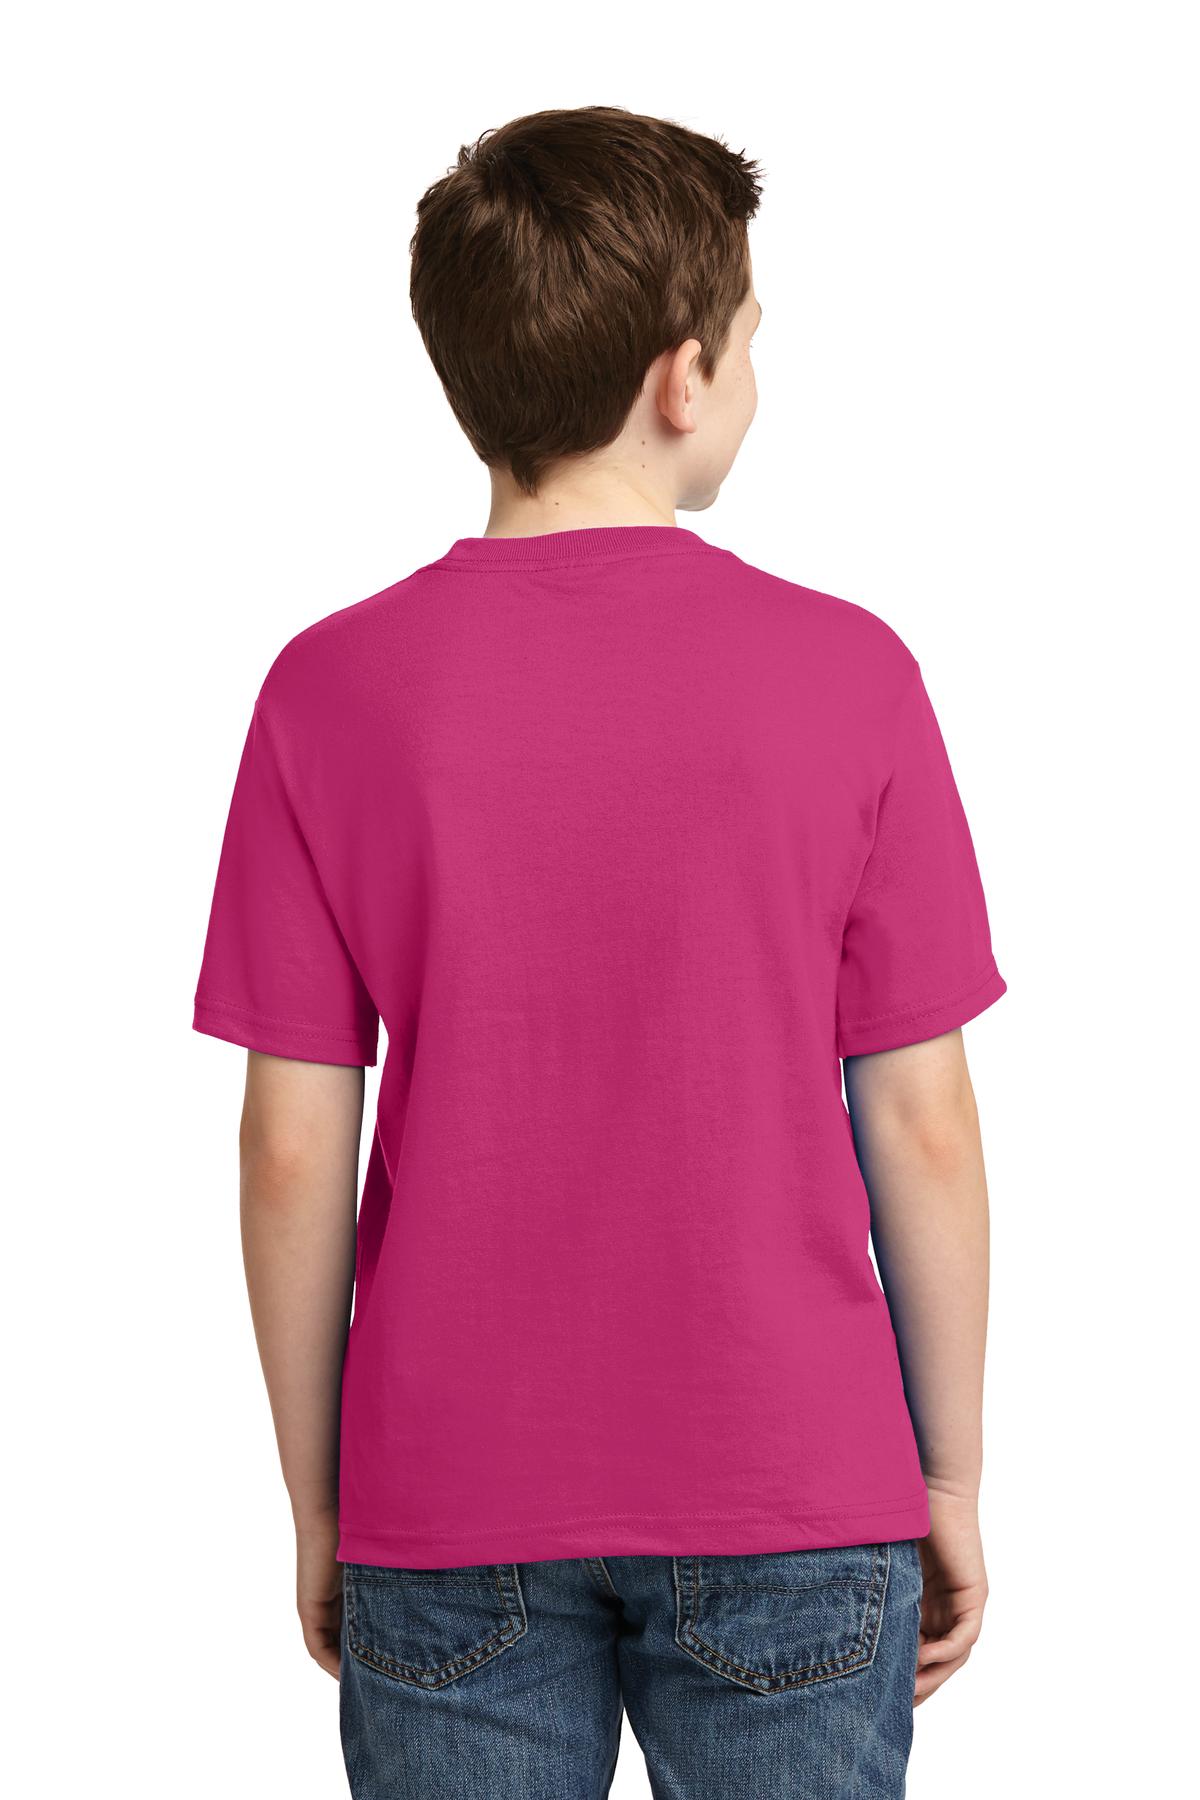 JERZEES® - Youth Dri-Power® 50/50 Cotton/Poly T-Shirt. 29B [Cyber Pink] - DFW Impression